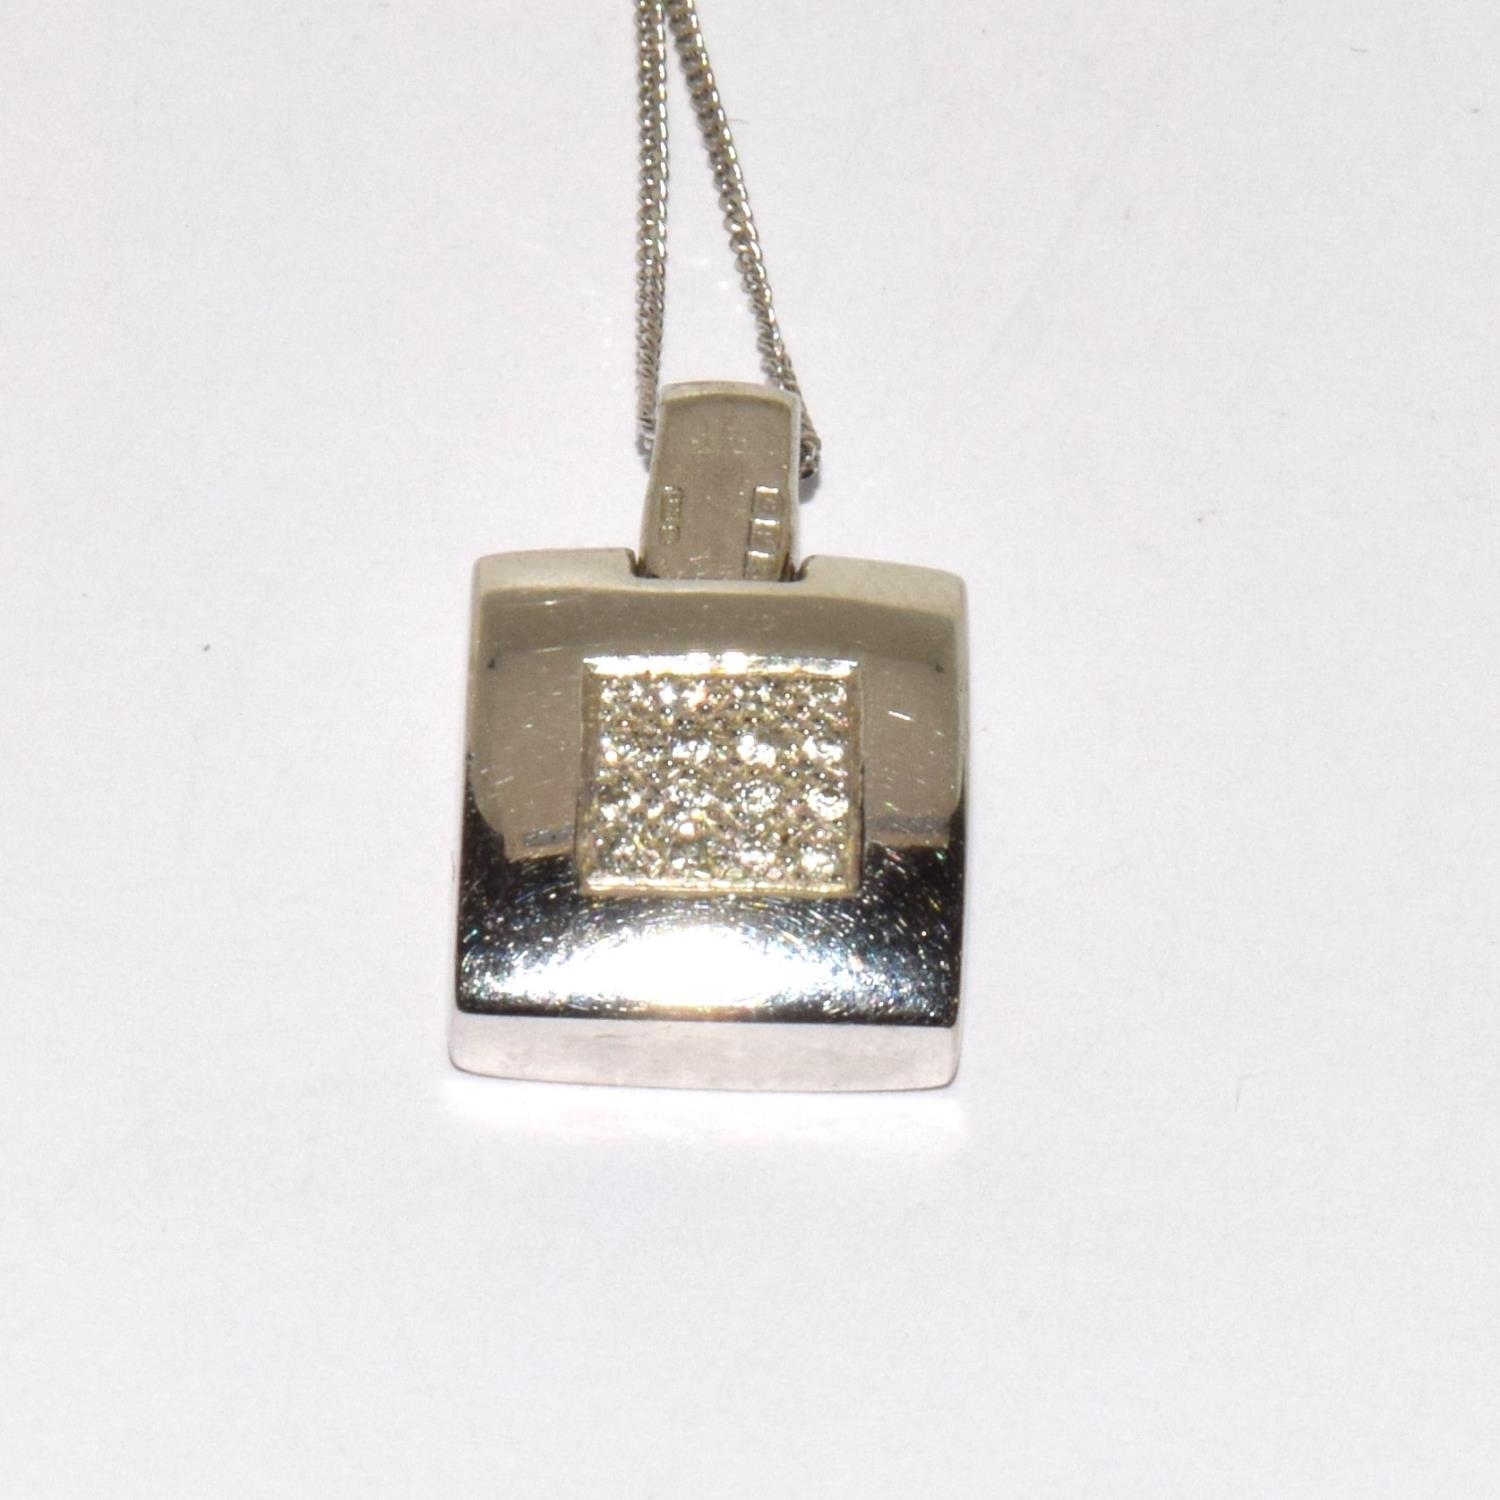 9ct white gold Diamond Pendant necklace chain 40cm 3.3g - Image 7 of 7